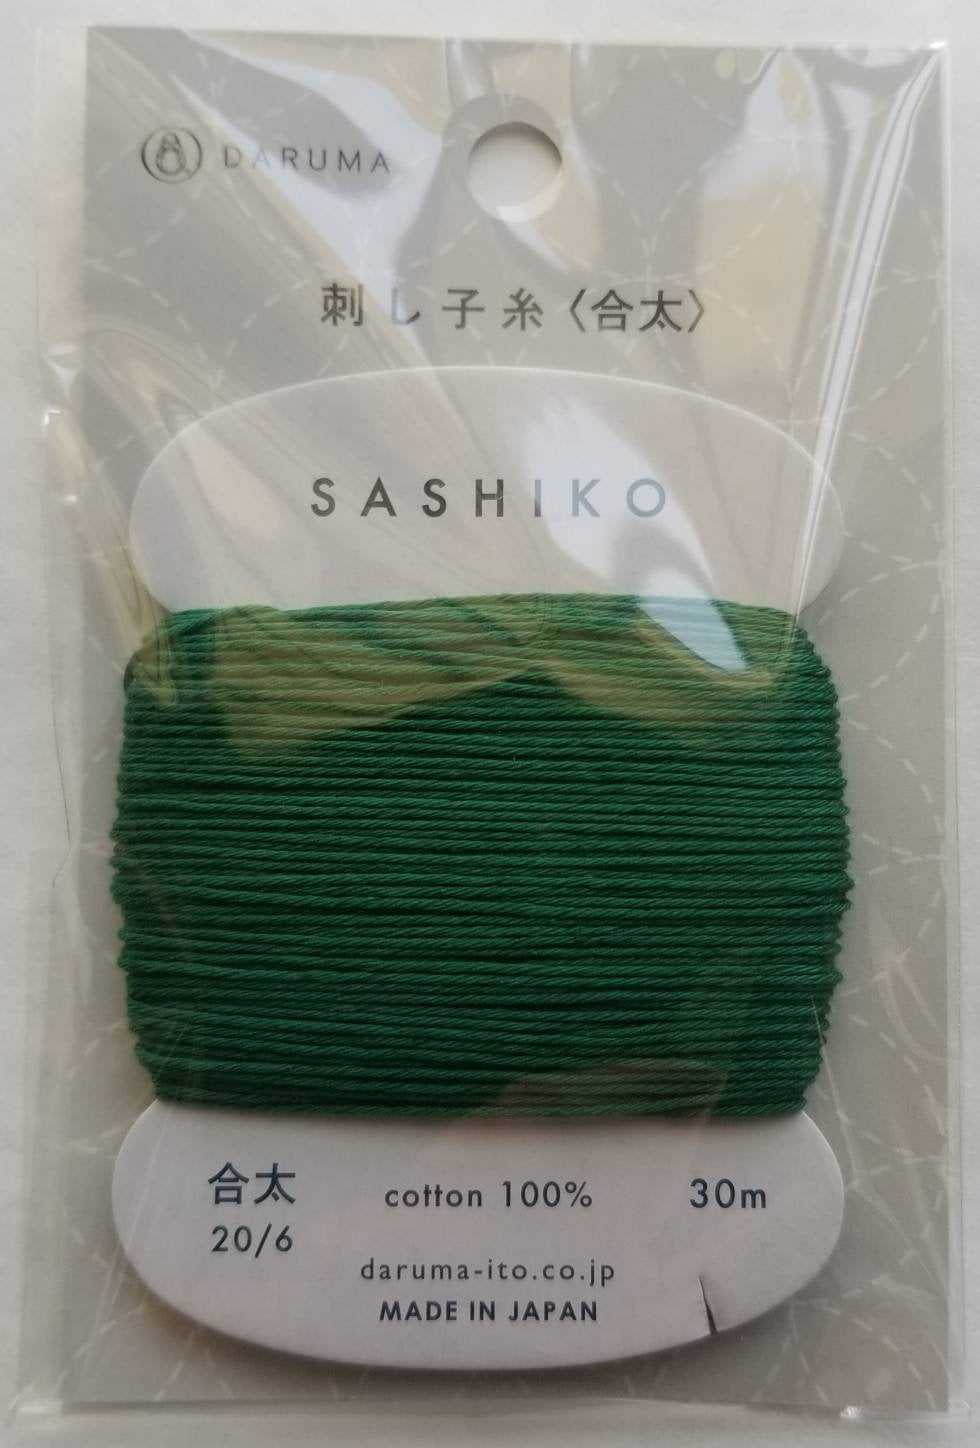 Daruma #208 BAMBOO GREEN Japanese Cotton SASHIKO thread 30 meter skein 20/6